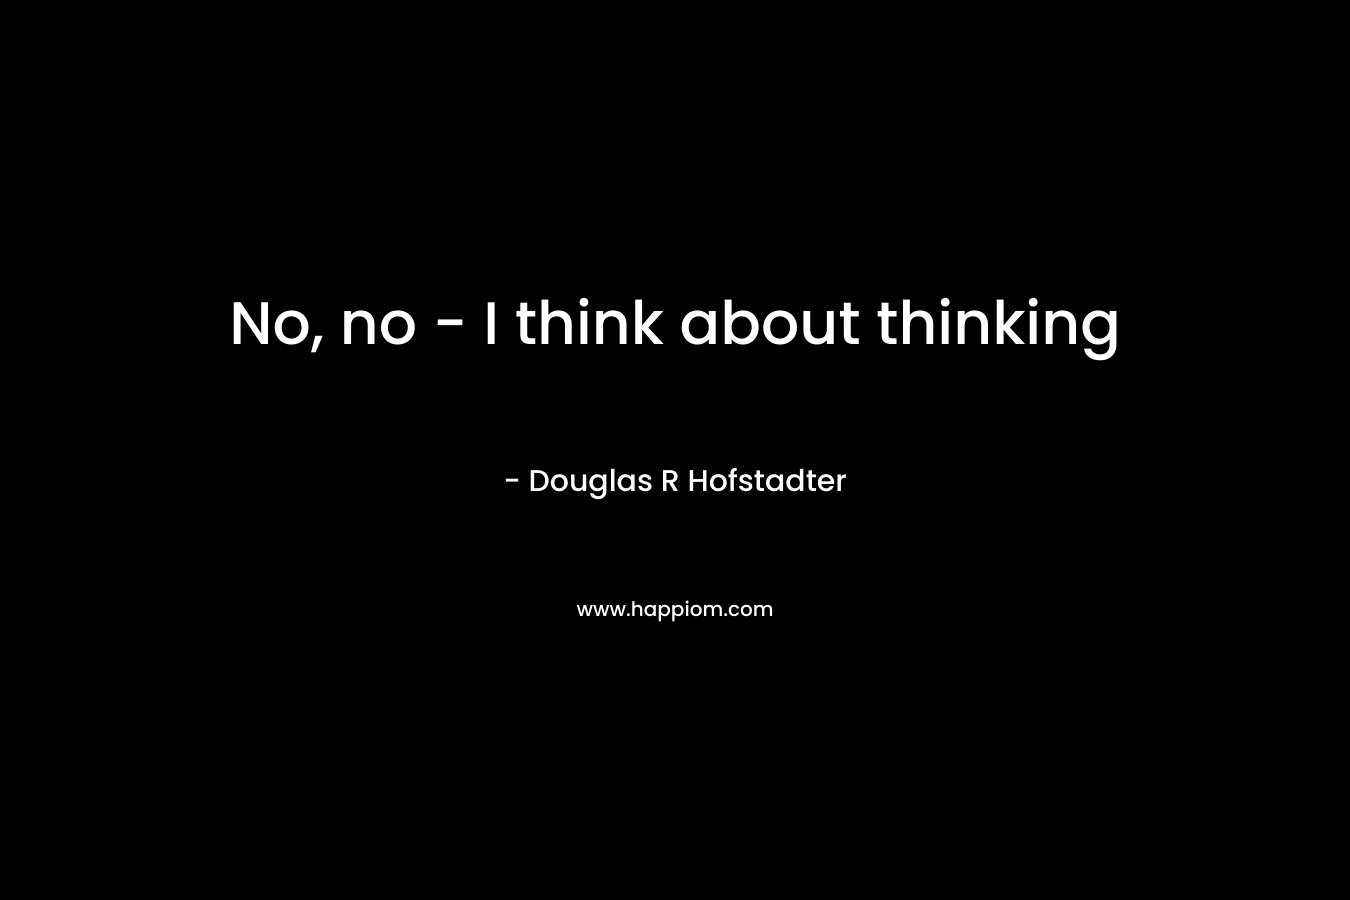 No, no - I think about thinking